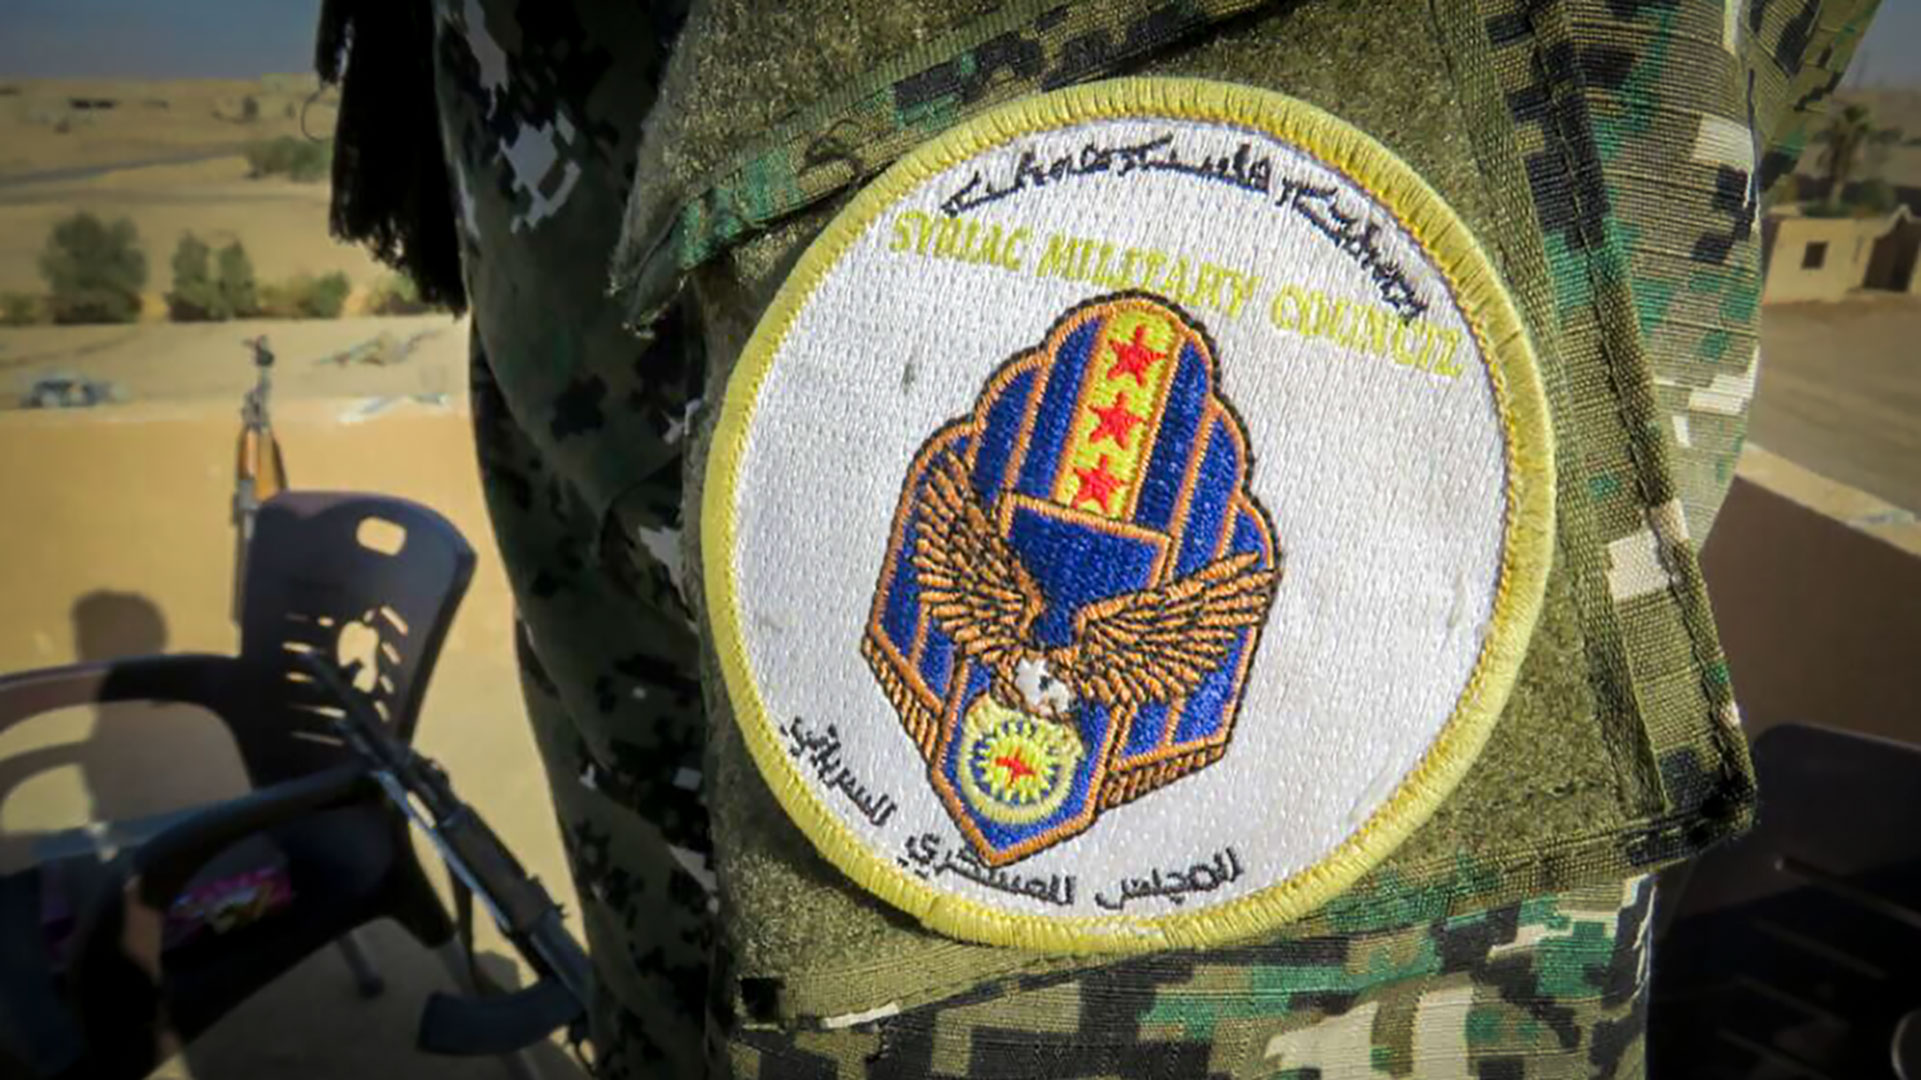 Syriac Military Council (MFS) patch